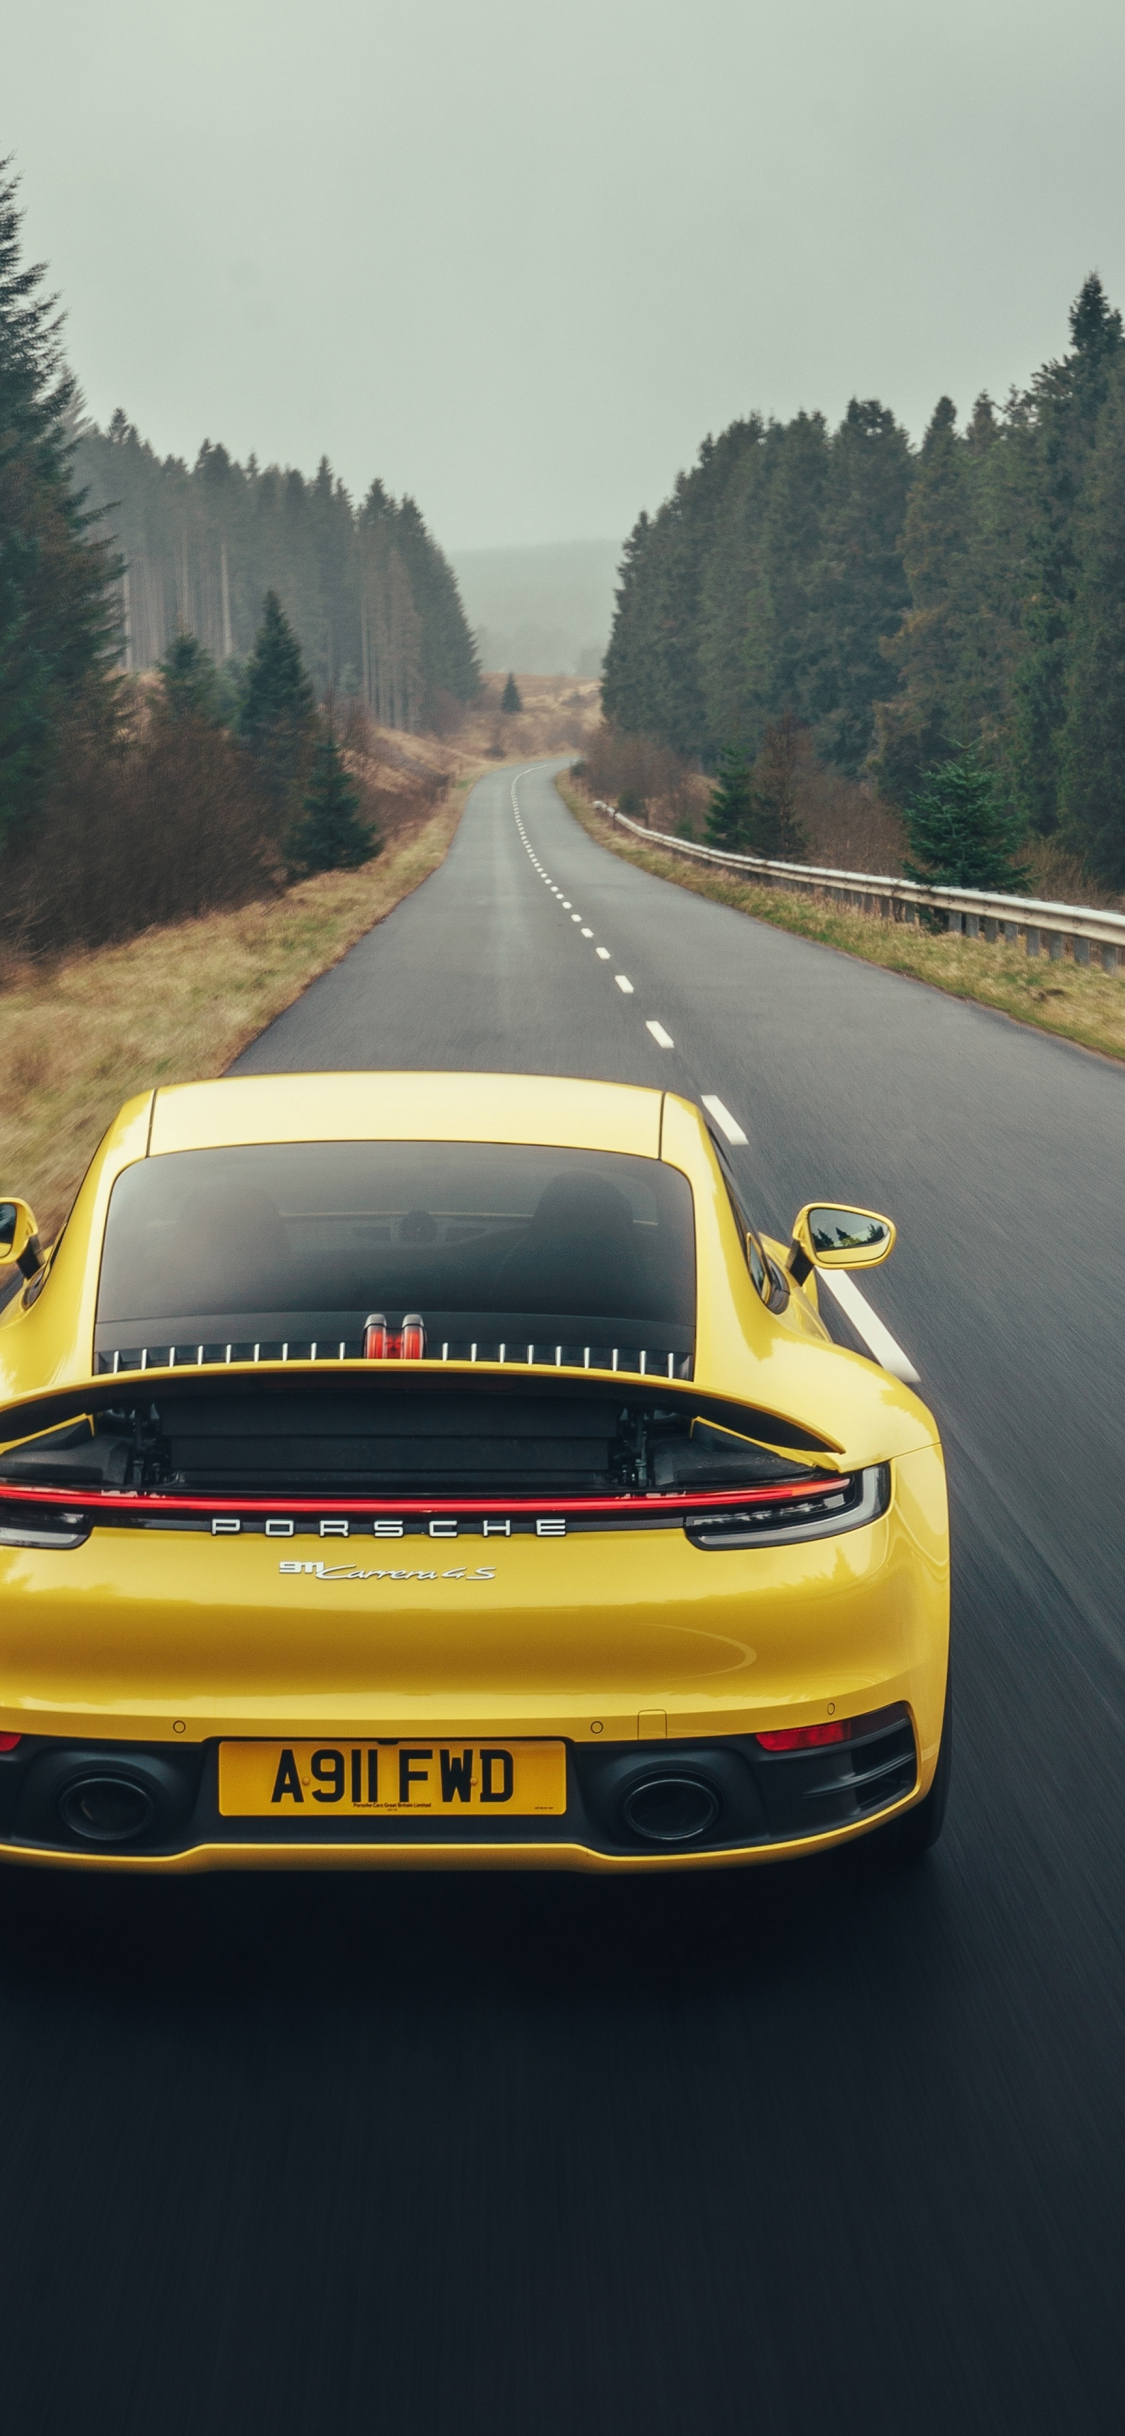 Download Porsche 911 Carrera 4s, On Road, Yellow 1125x2436 Wallpaper, Iphone X, 1125x2436 HD Image, Background, 20792